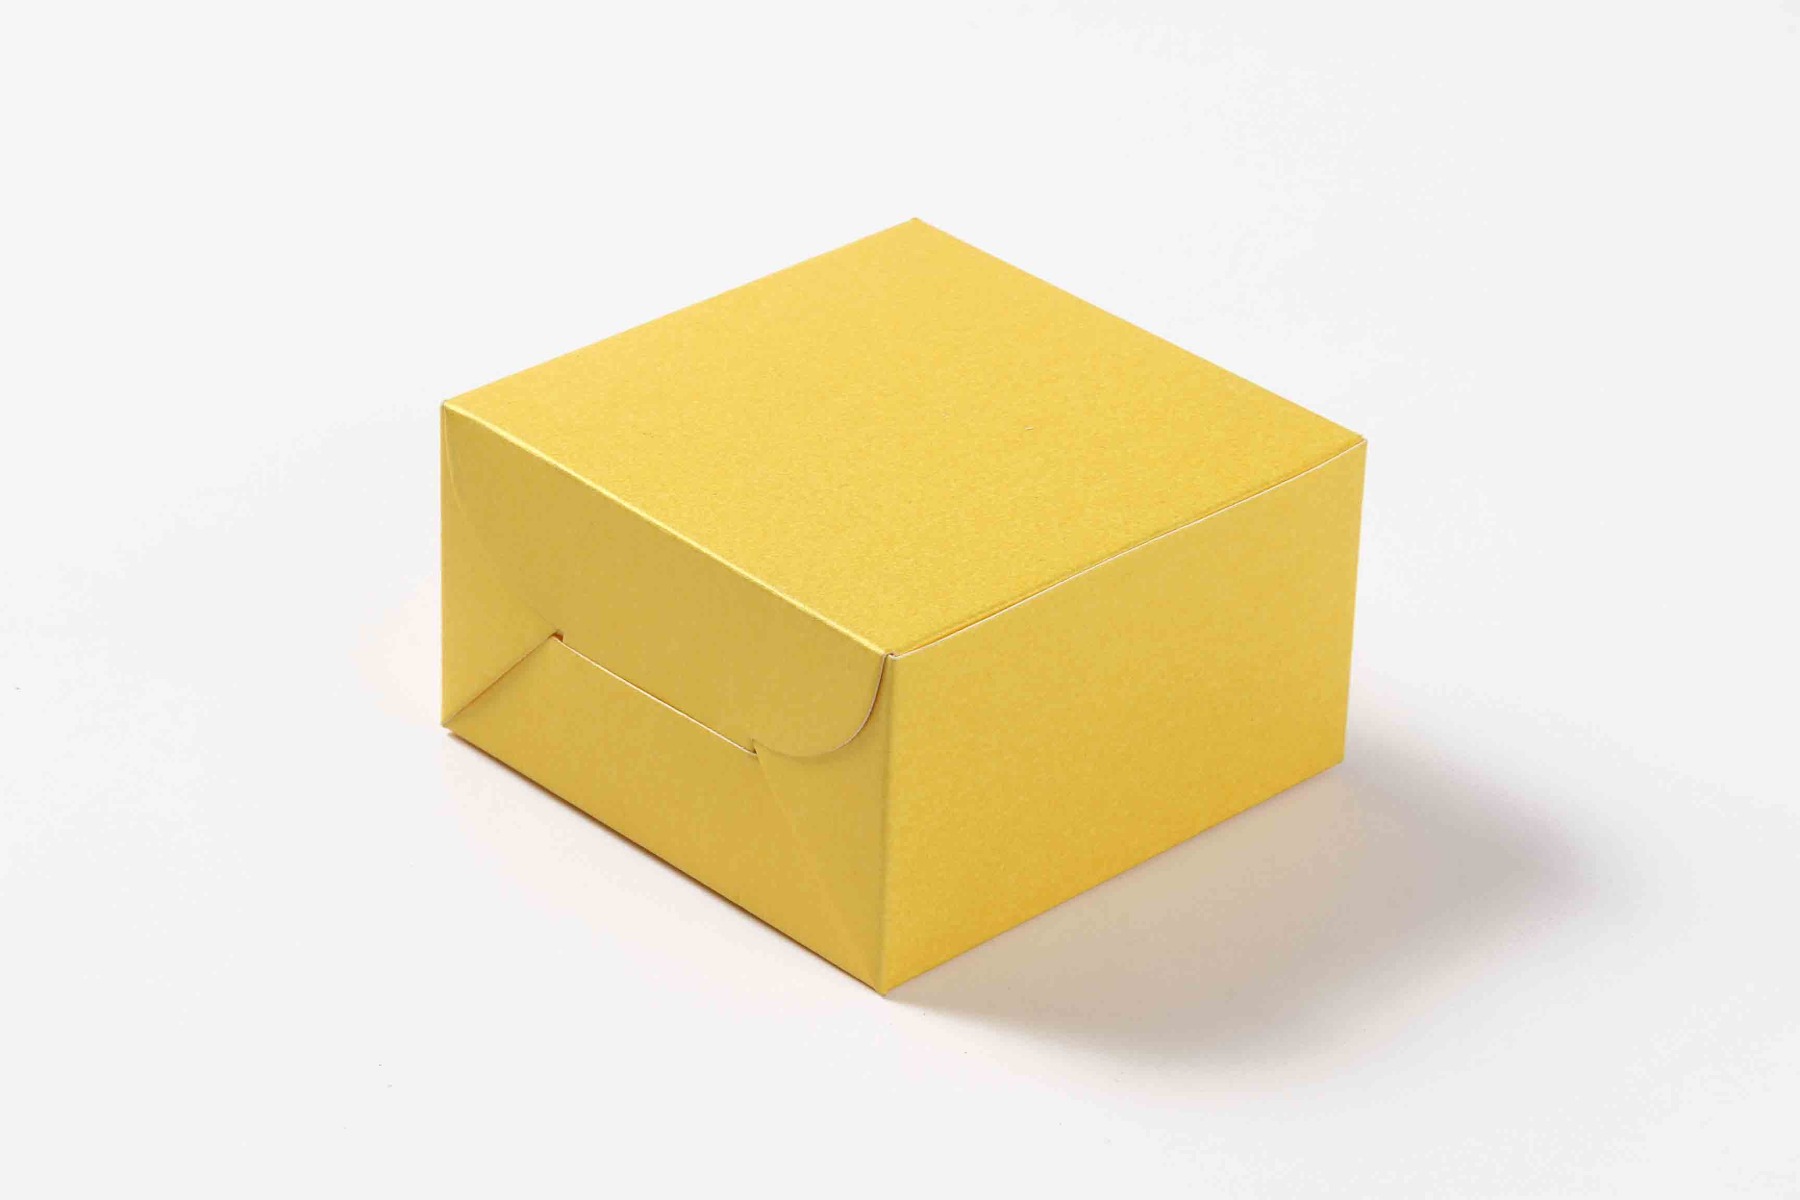 Small Size Cube Box No 6 - Yellow-8576